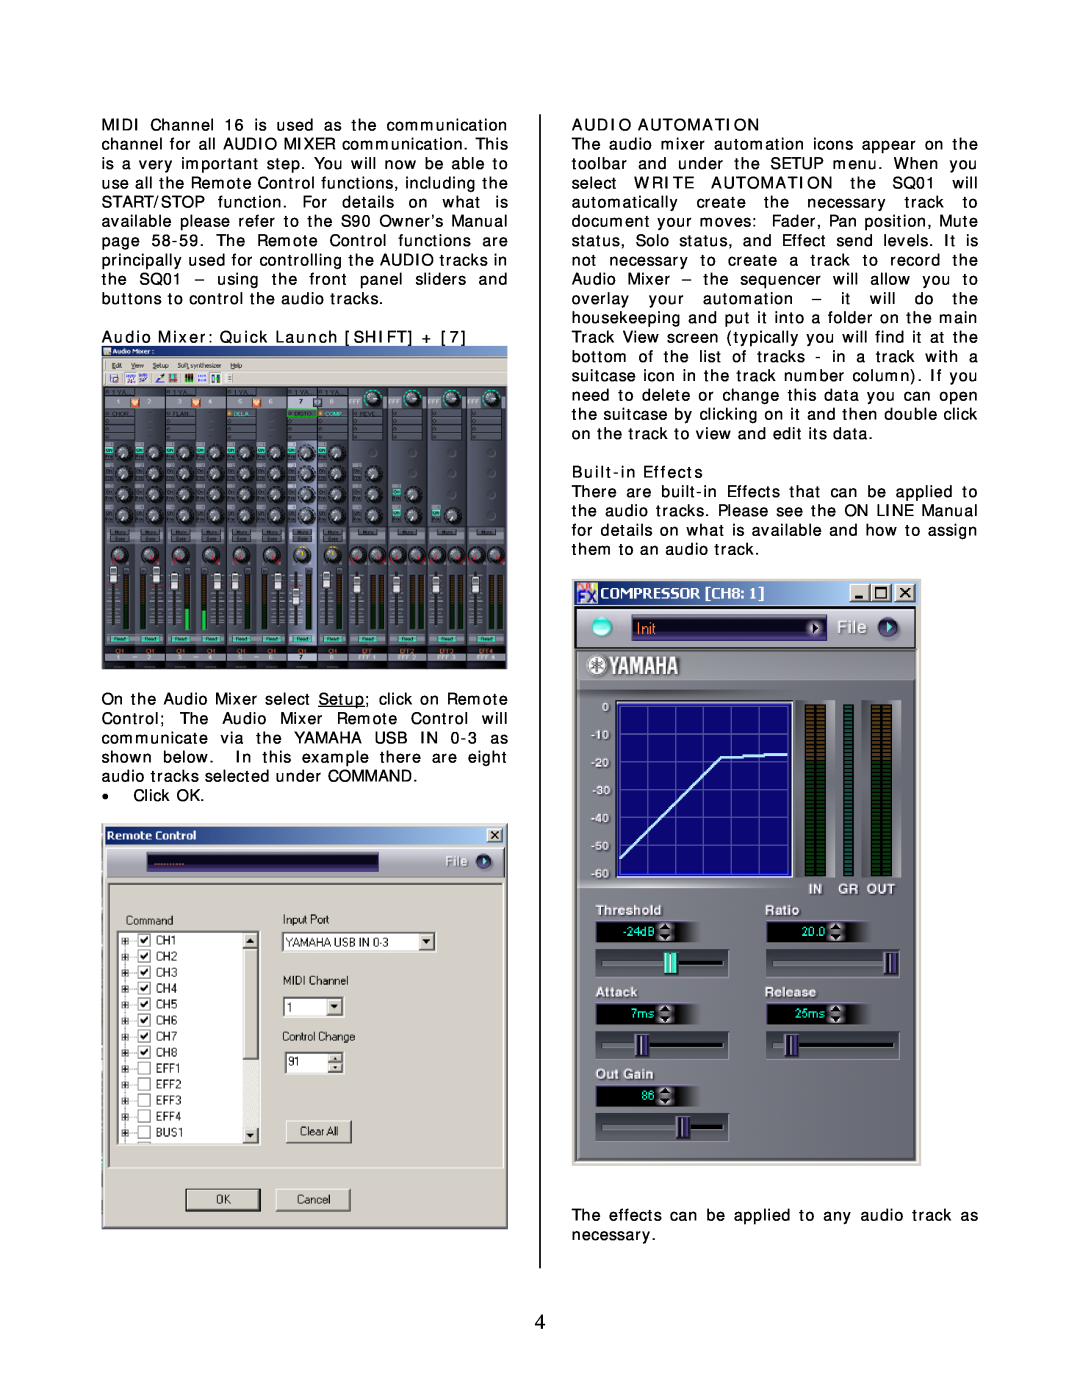 Yamaha SQ01, S90 manual Audio Mixer Quick Launch SHIFT +, Audio Automation, Built-inEffects 